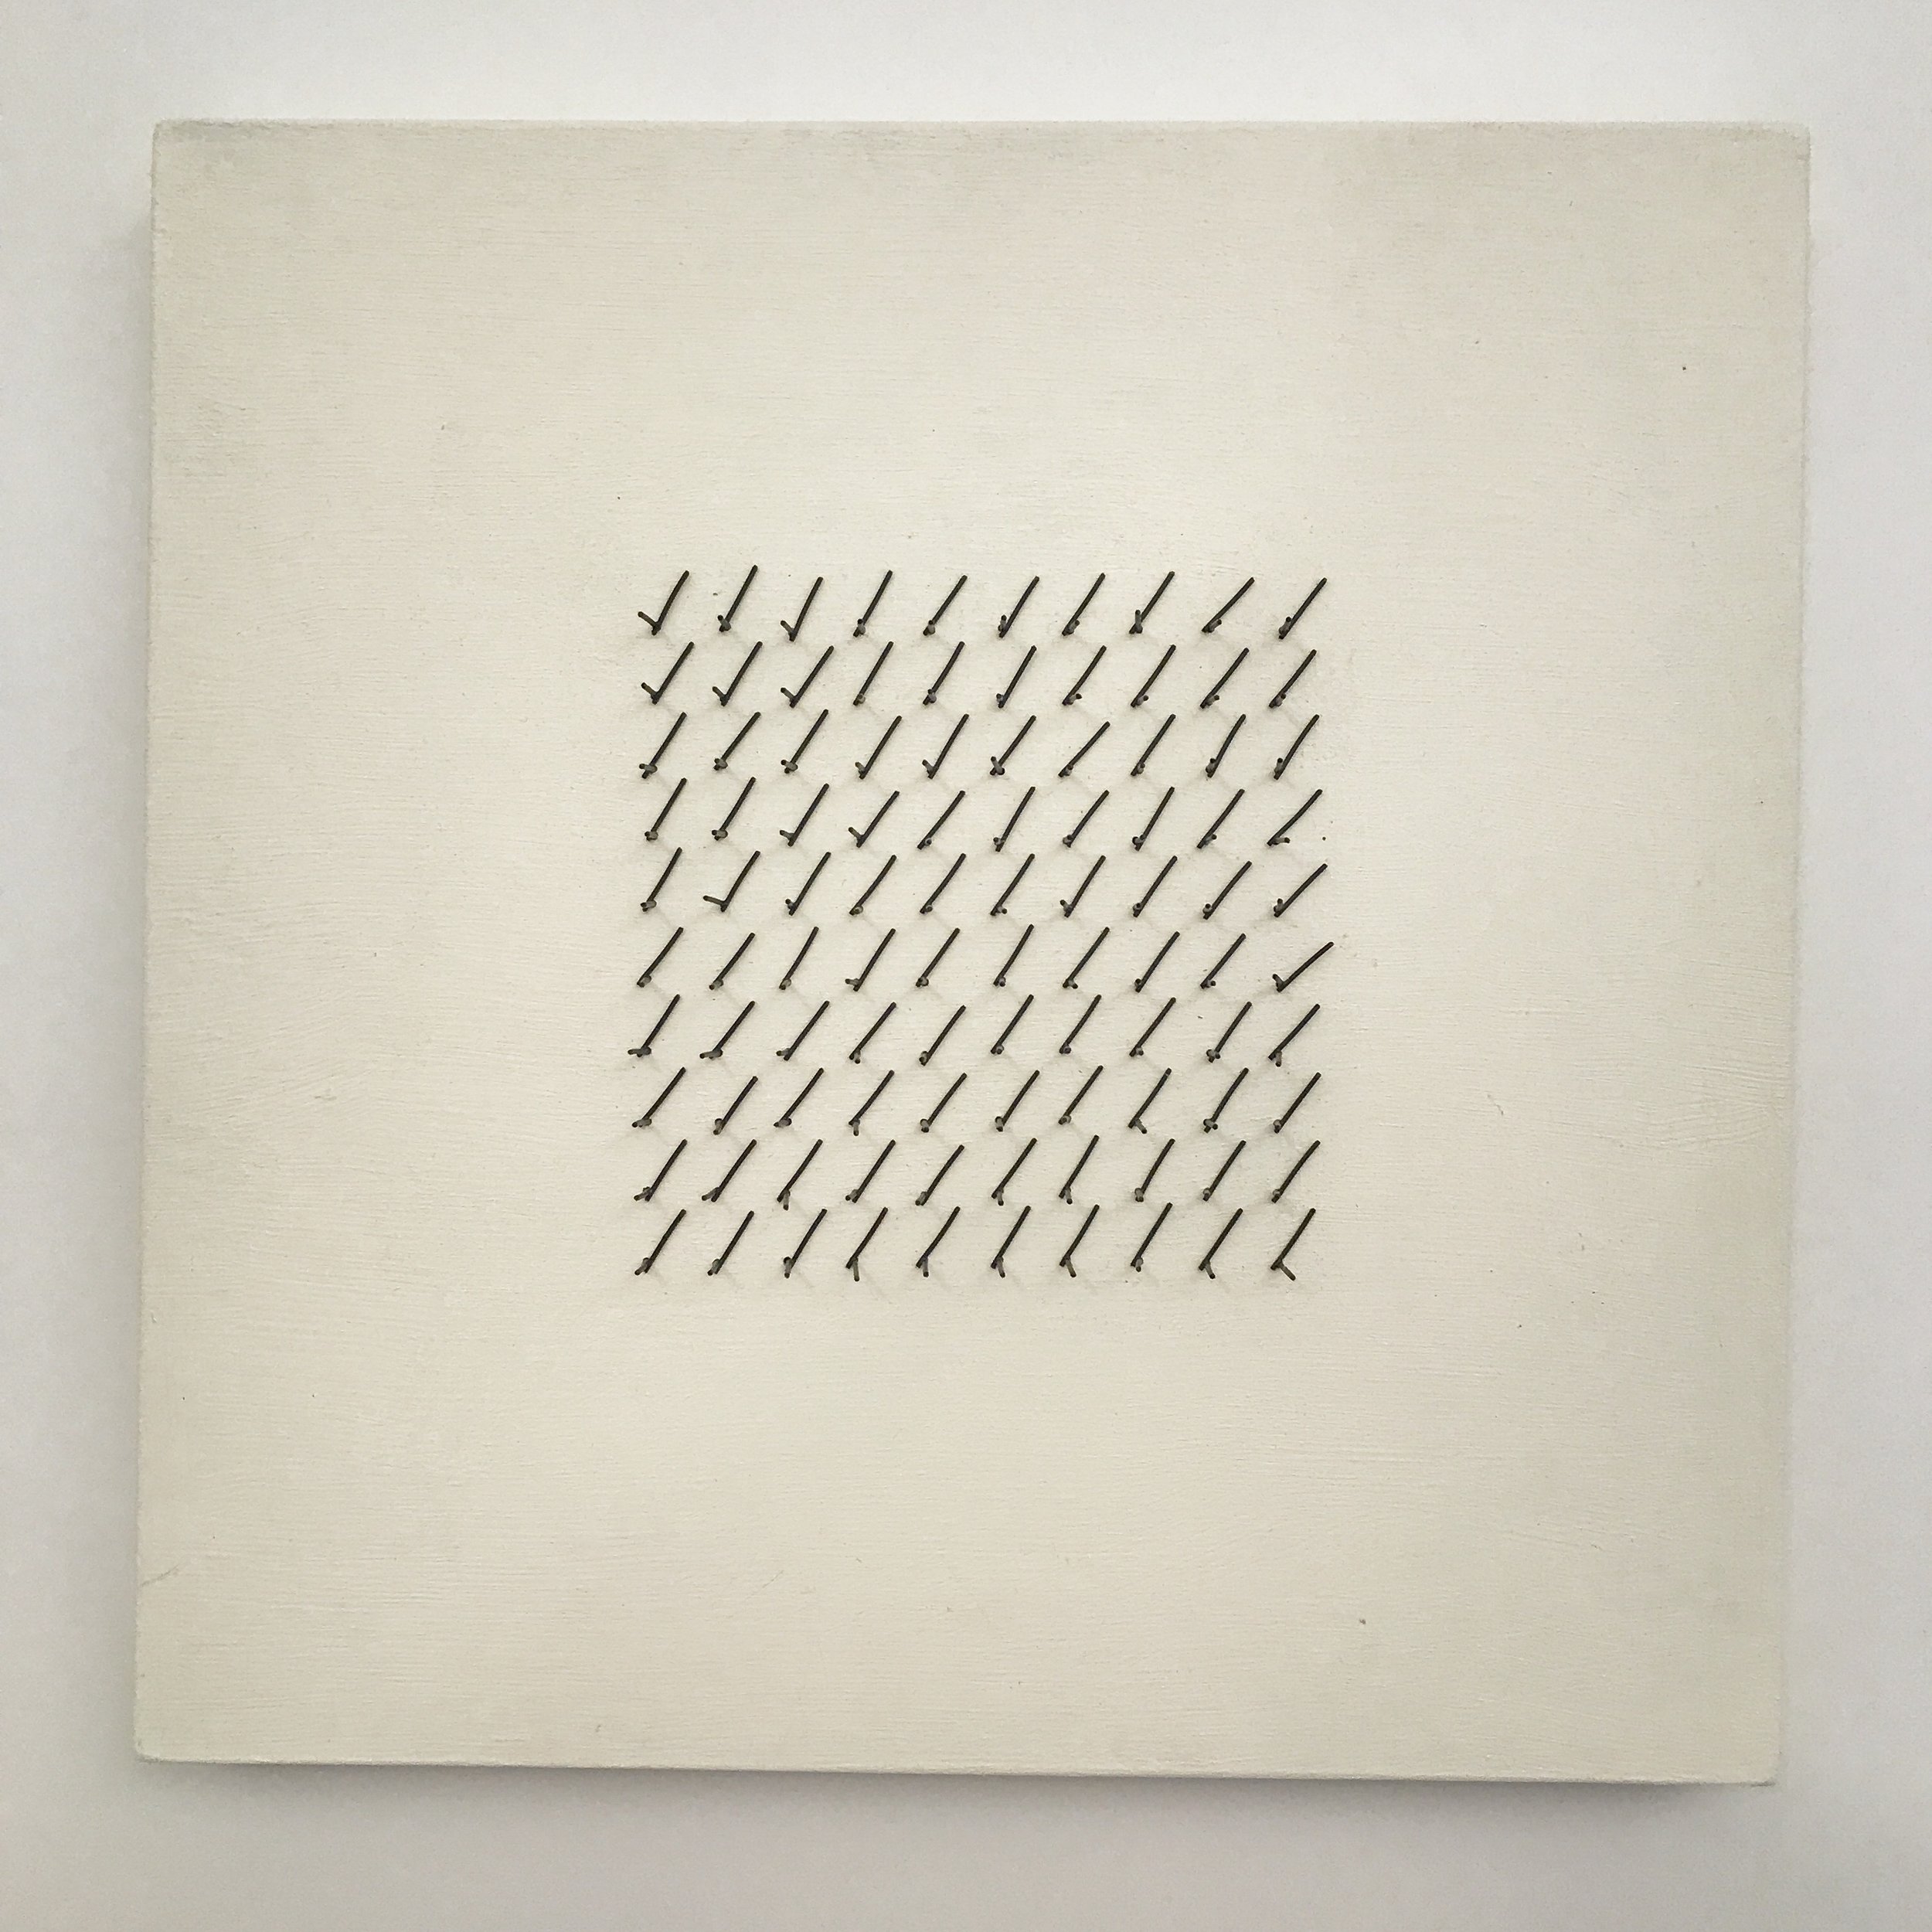  Doug Cross,  Meditation Square #1 , Wire mesh and wood, 12”x12”x3” 